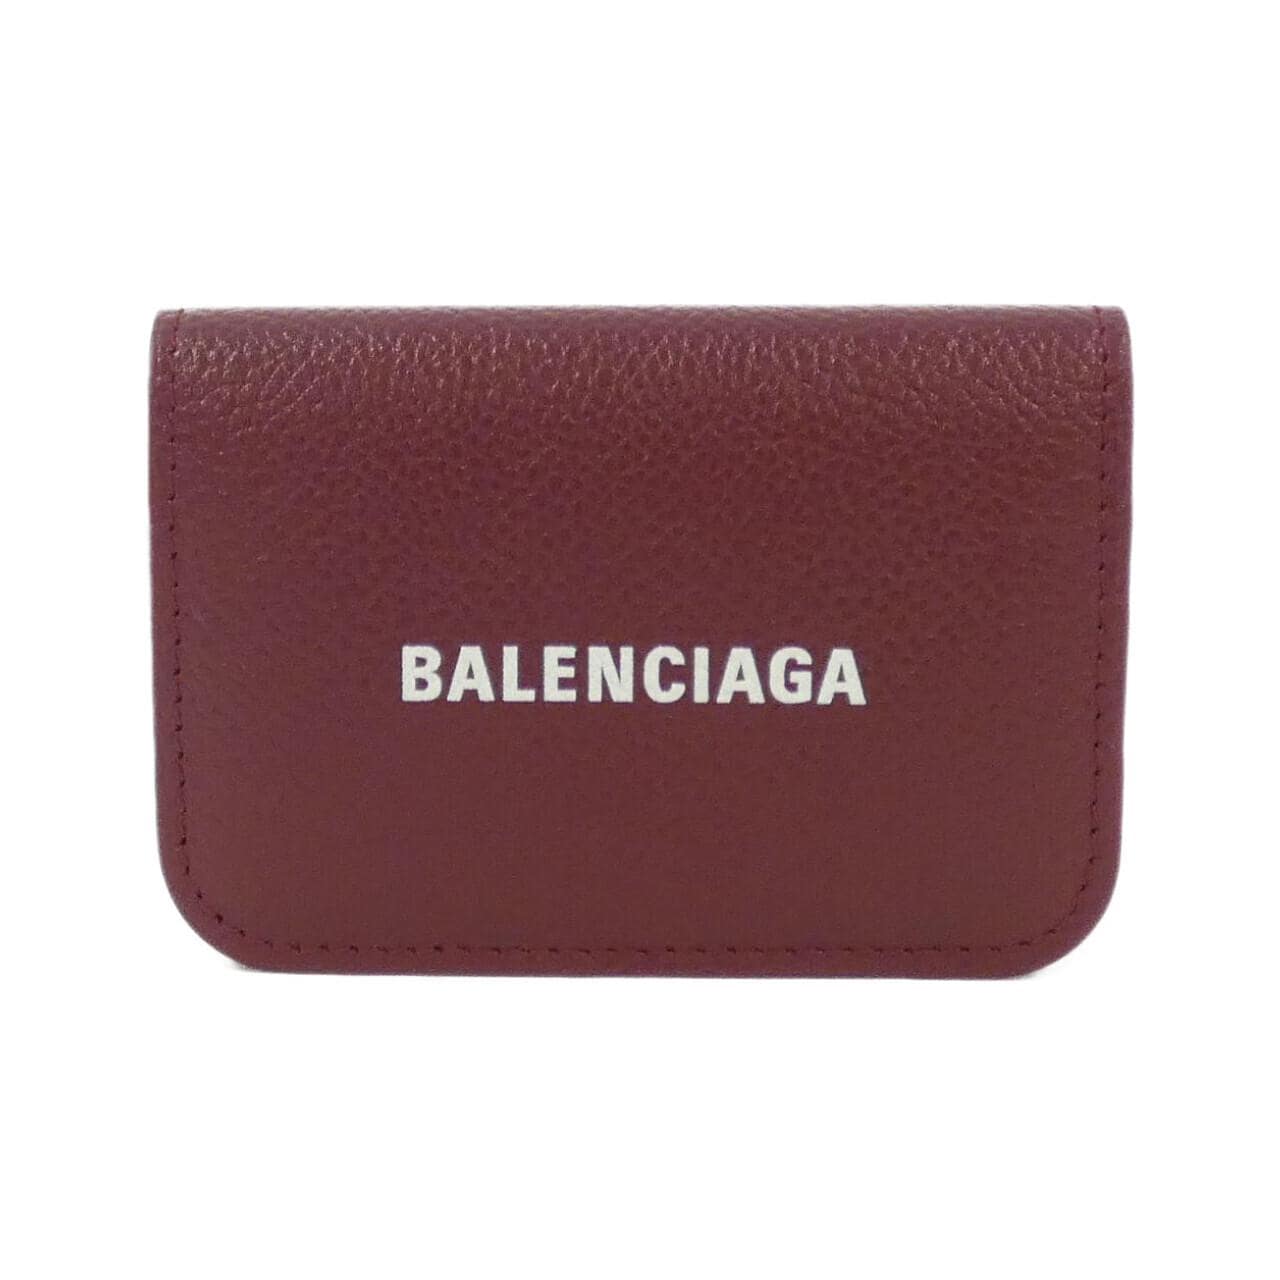 [BRAND NEW] BALENCIAGA Cash Mini Wallet 593813 1IZI3 Wallet